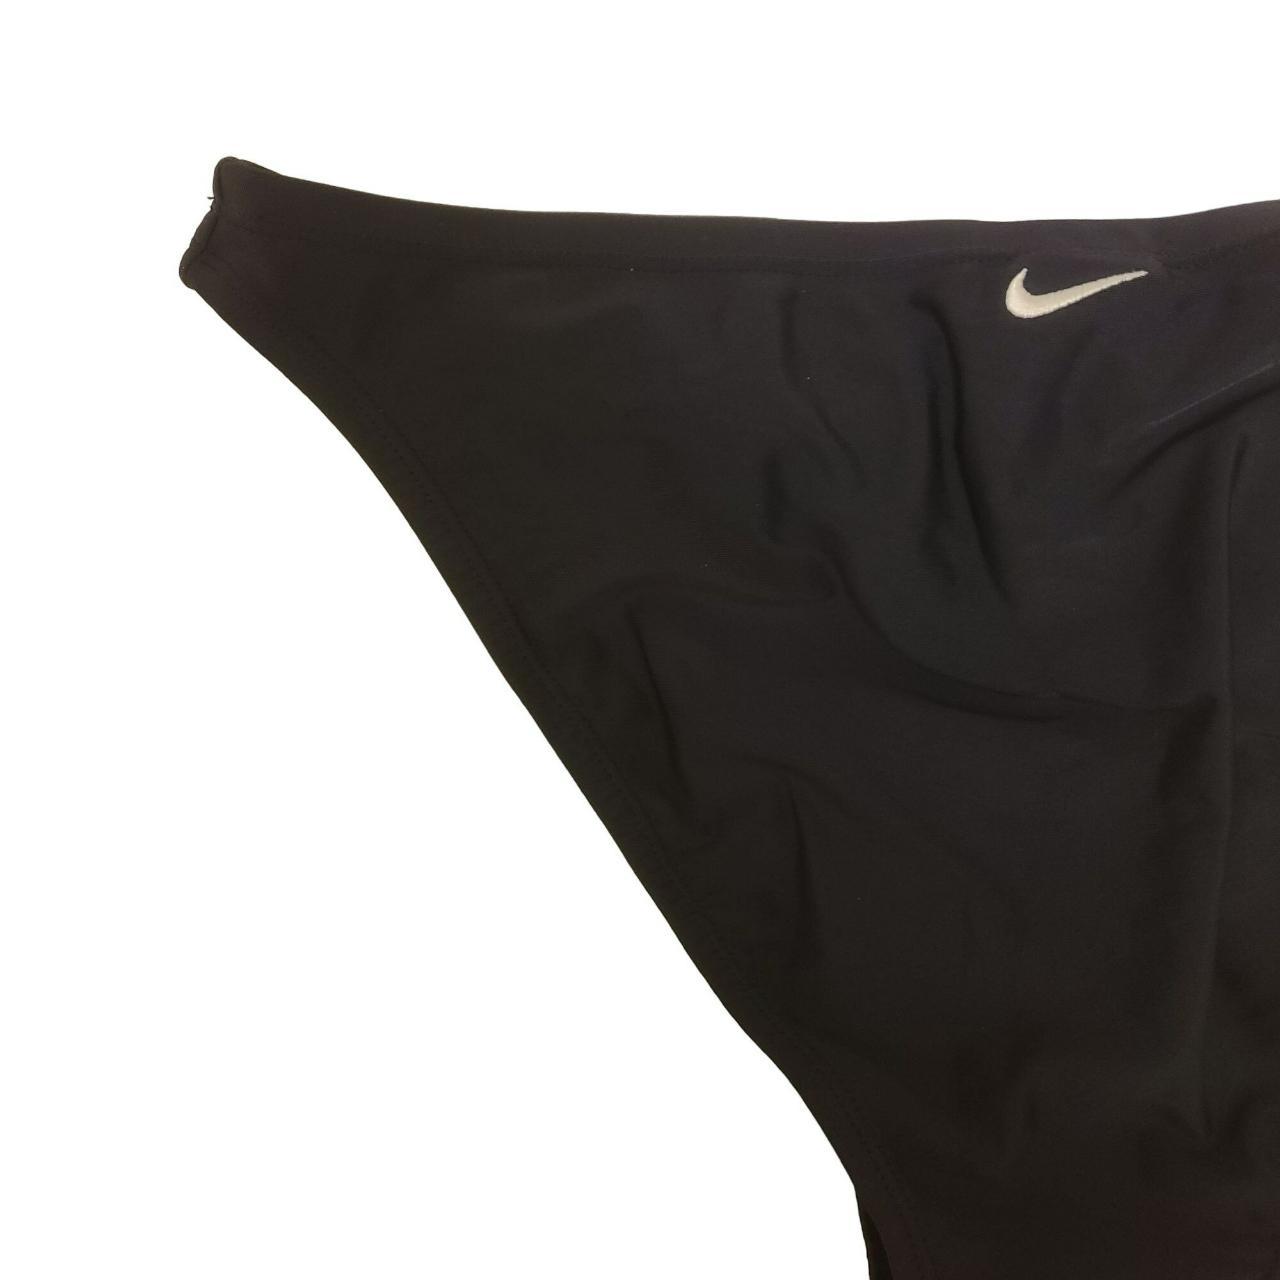 Nike Bikini Bottoms Swim Bottoms Athletic Fit Black... - Depop